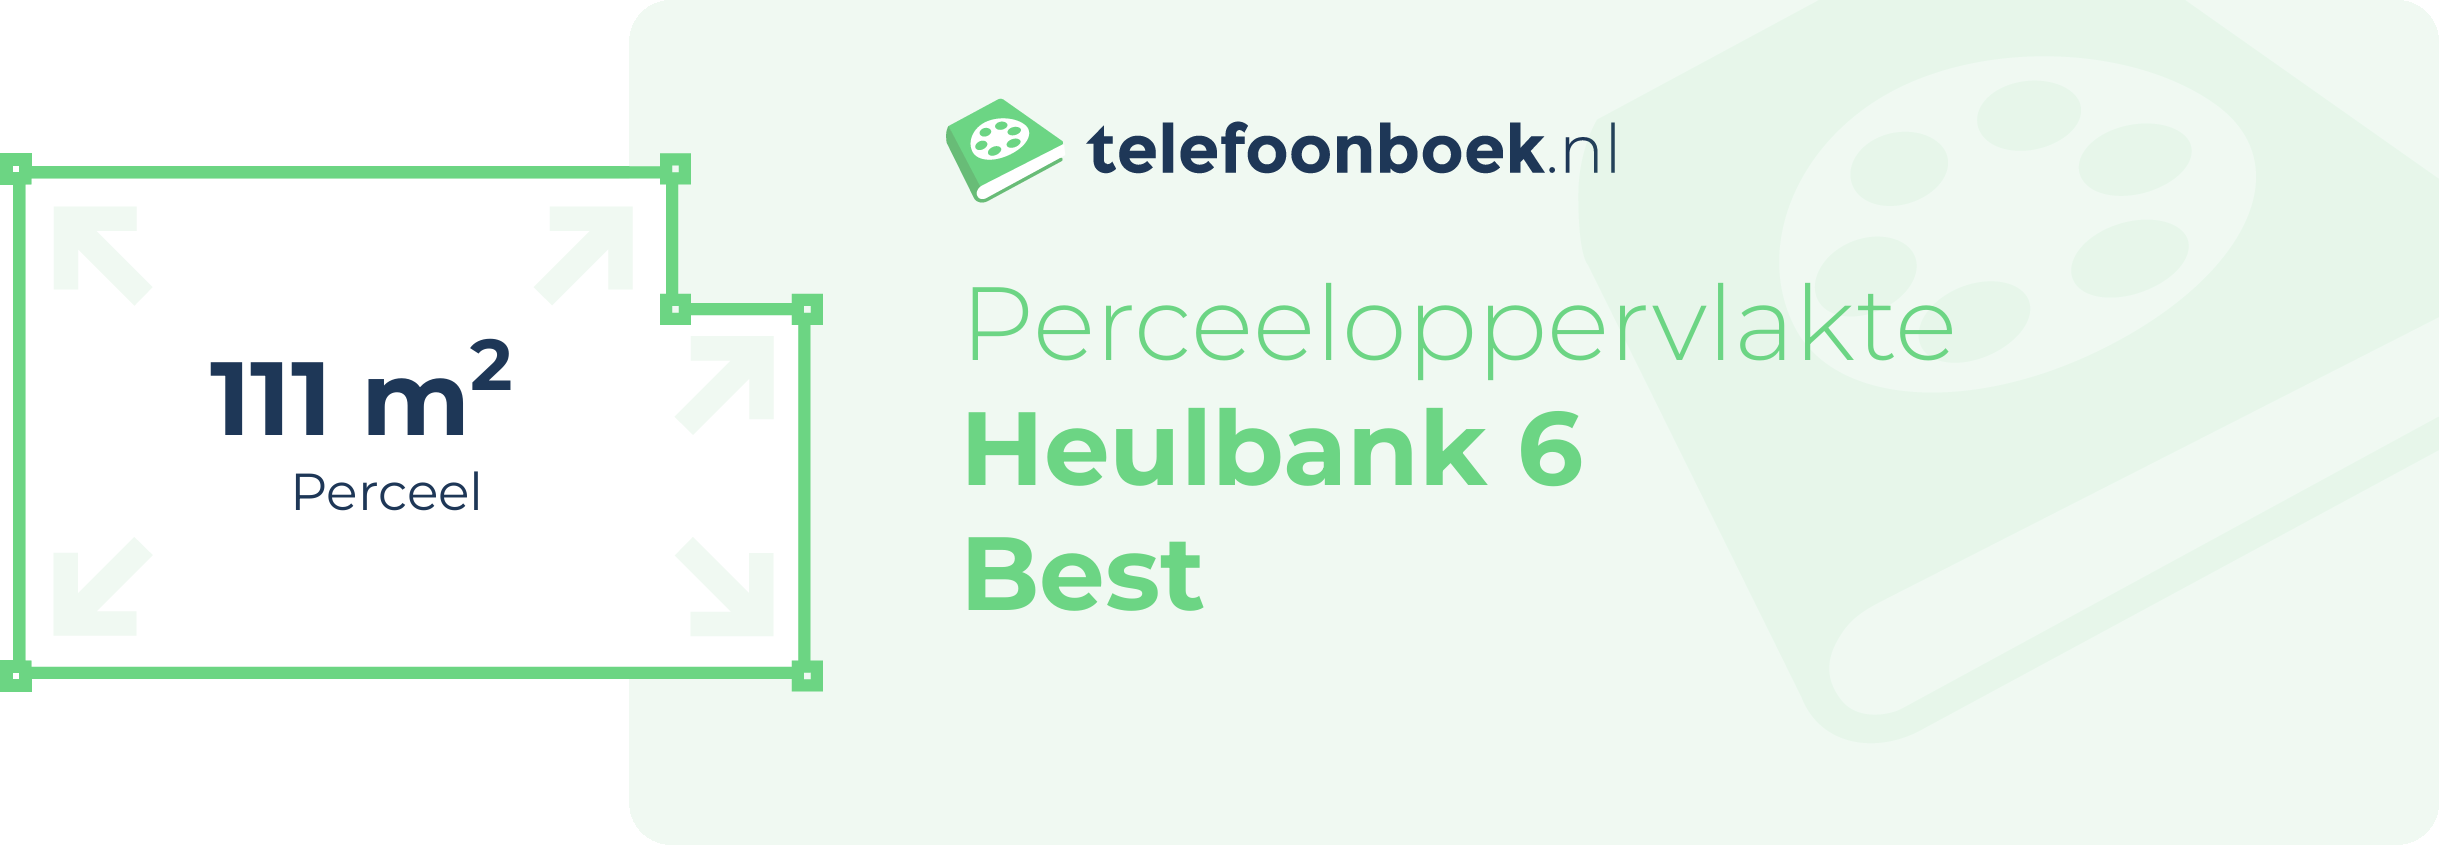 Perceeloppervlakte Heulbank 6 Best